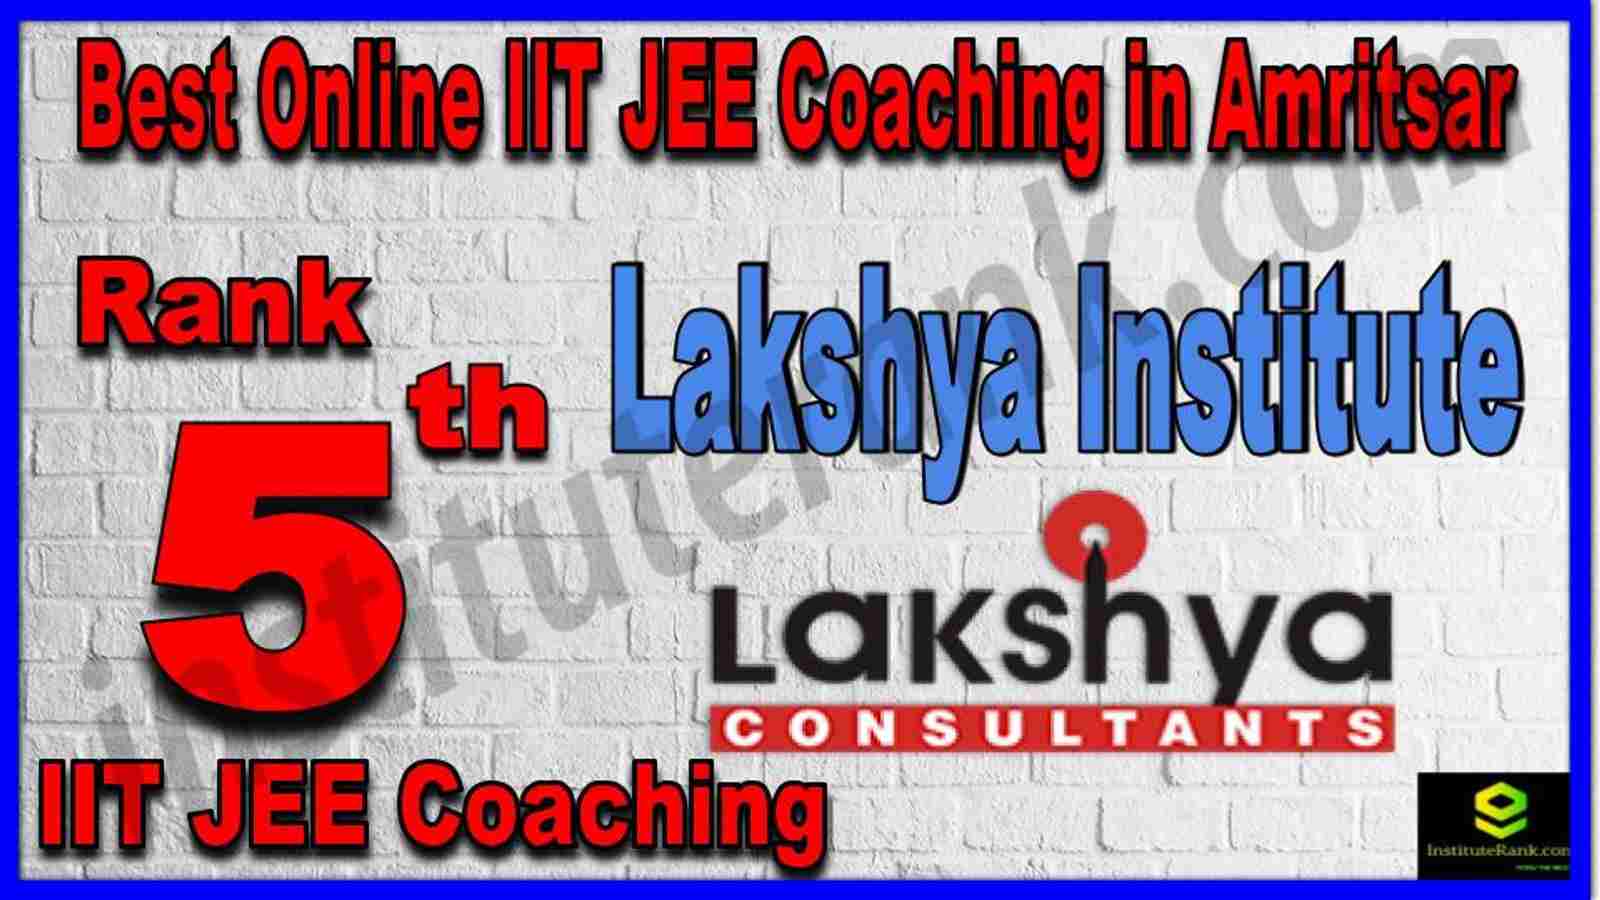 Rank 5th Best Online IIT JEE Coaching in Amritsar